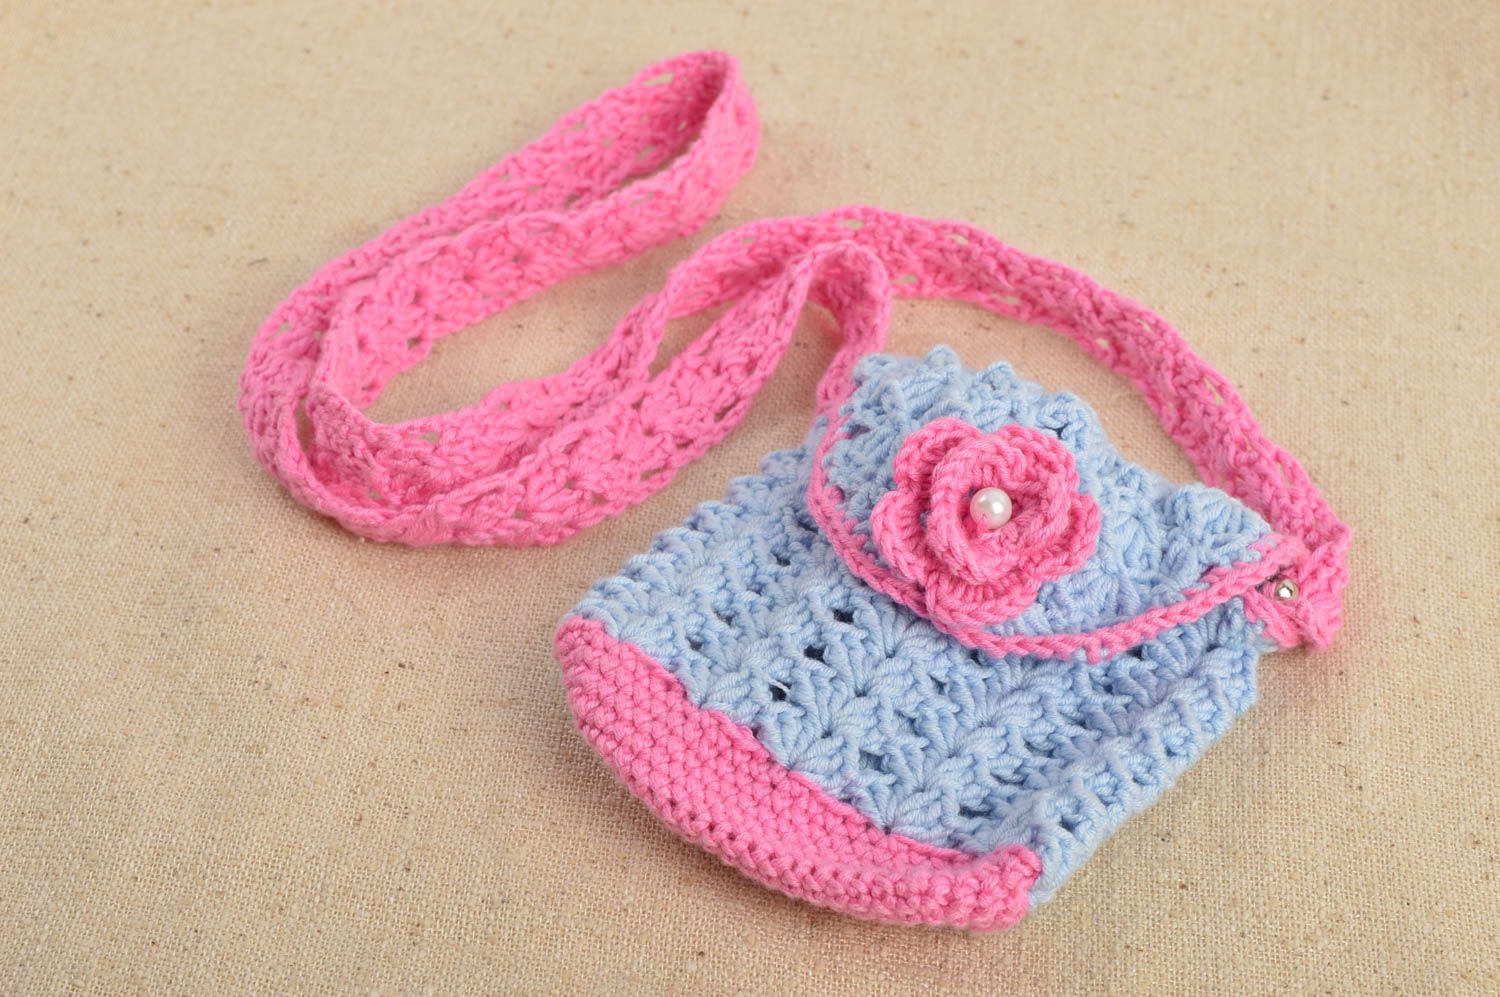 VTG Macrame Crochet Handbag Purse Handmade BOHO Hippie Wood Ring Loop  Handles | eBay